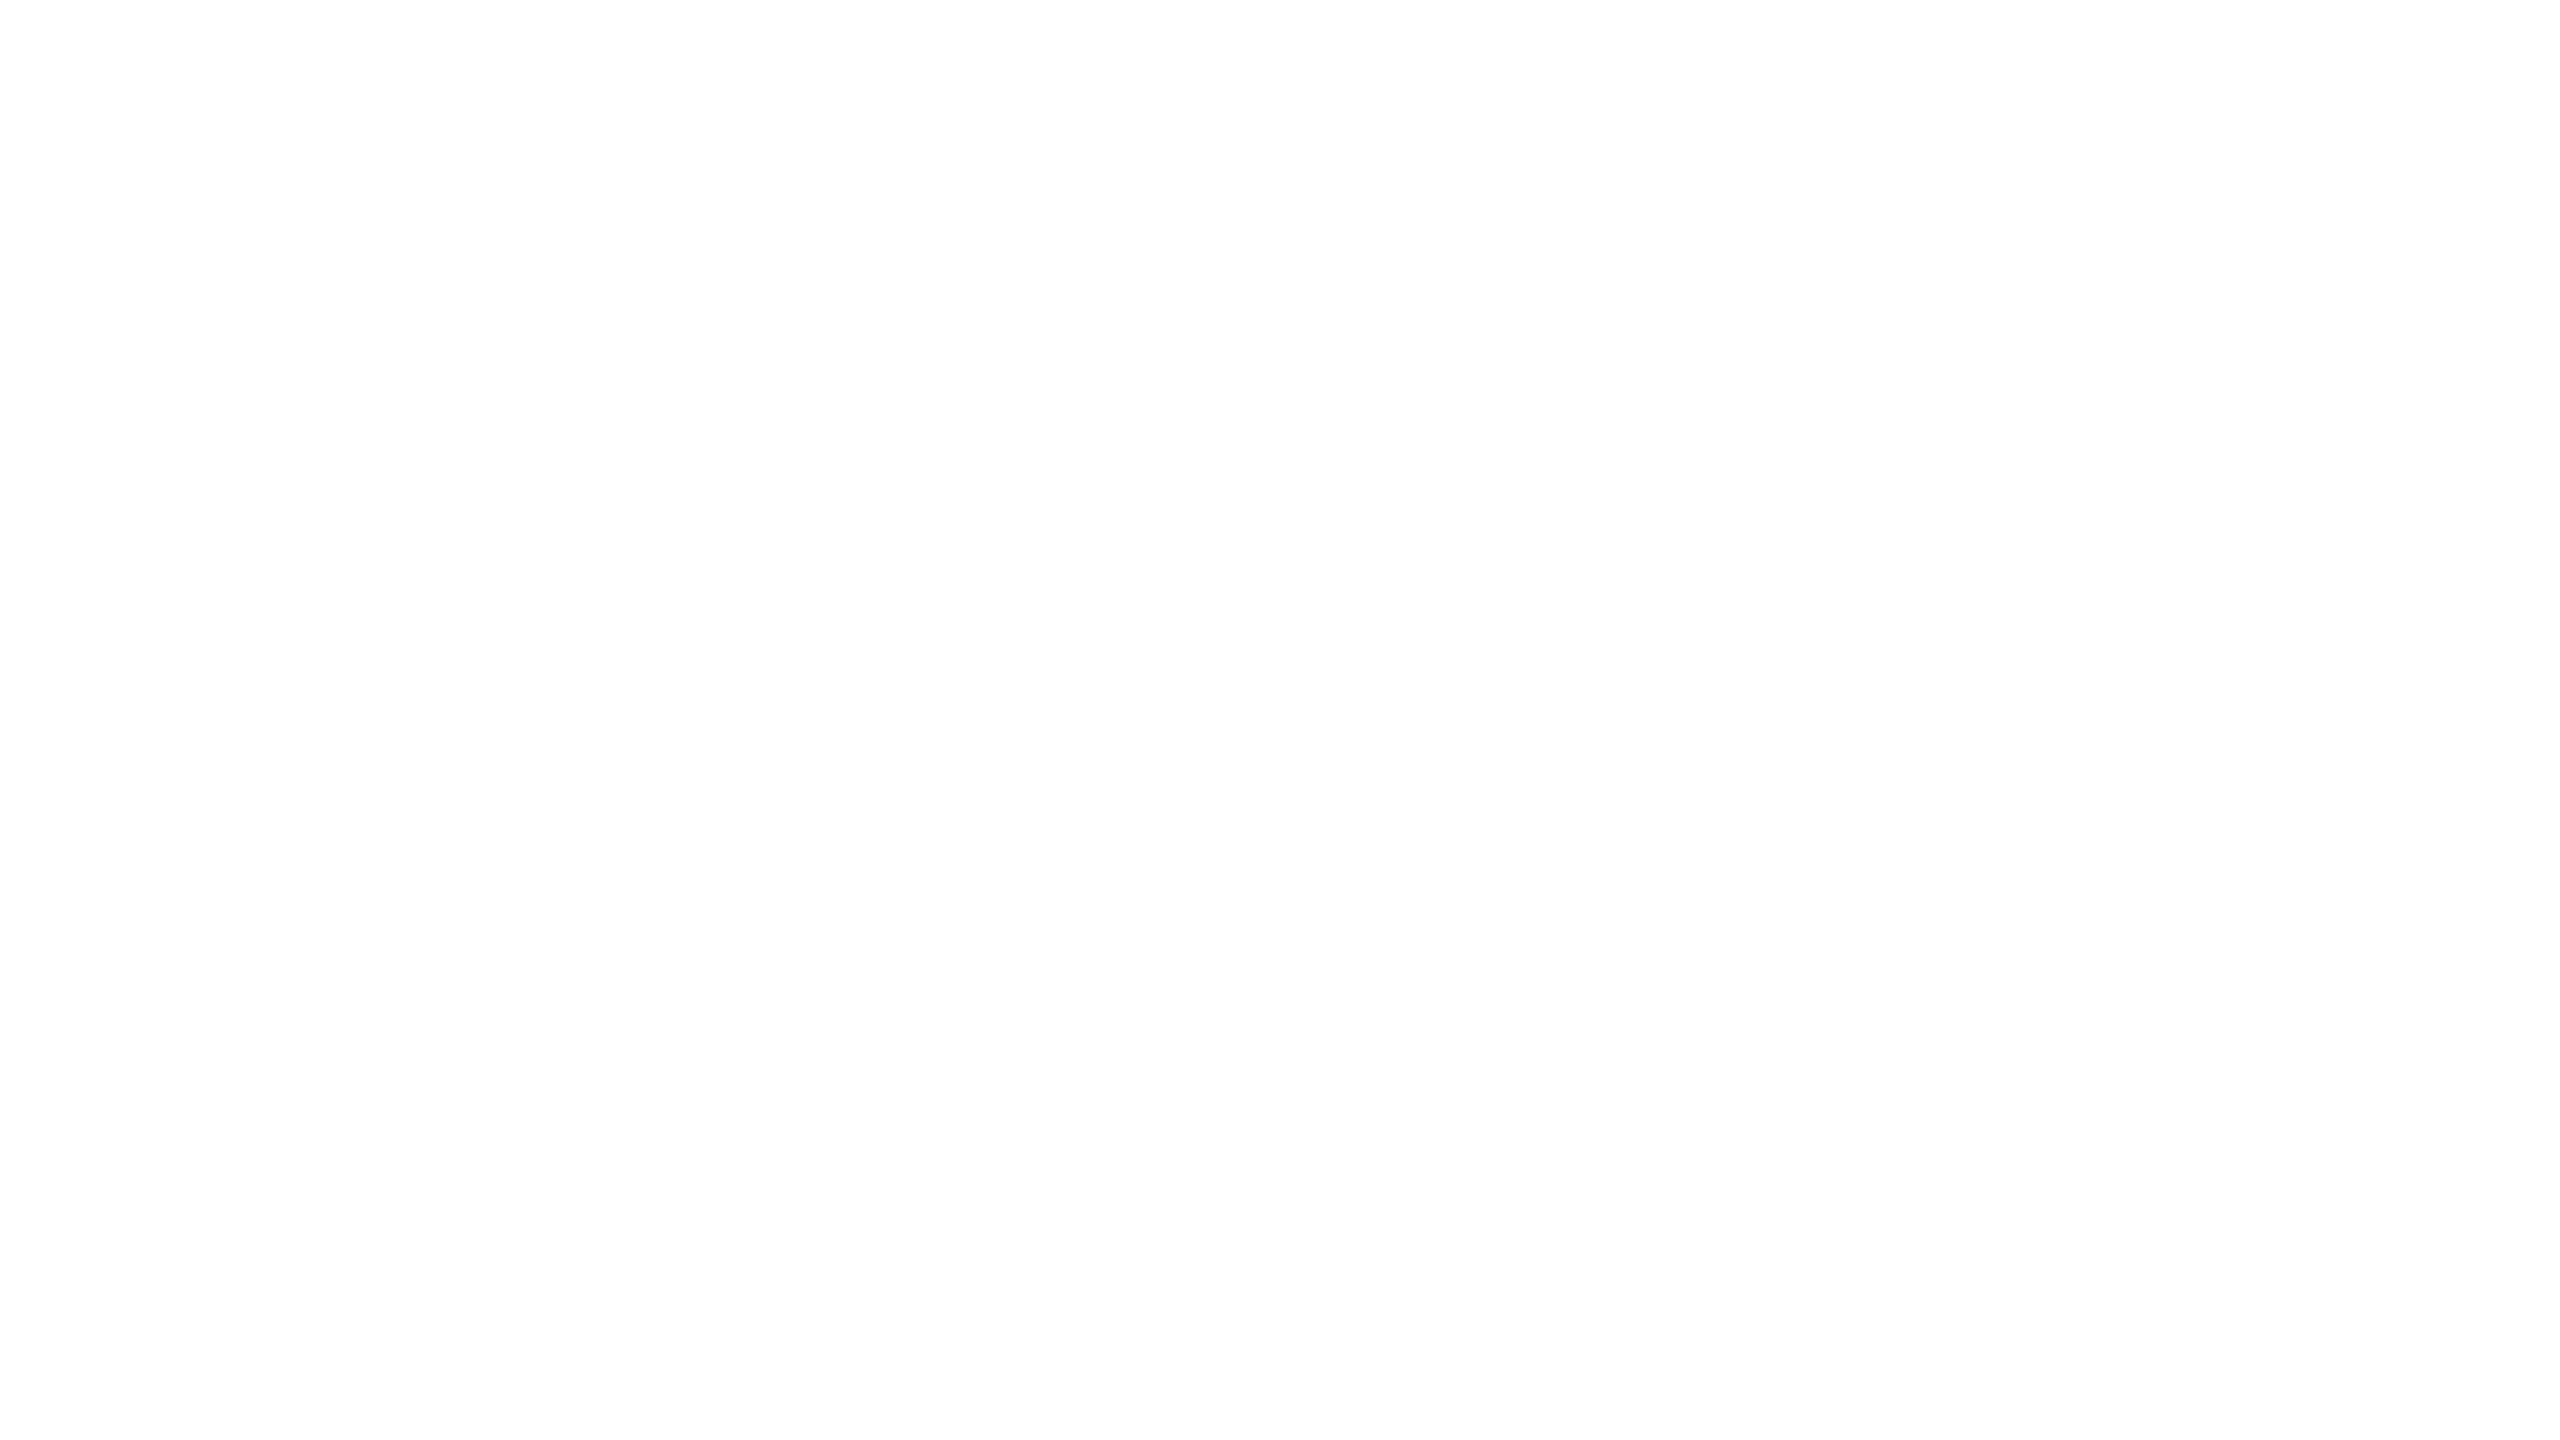 bein-sport-logo-white.png